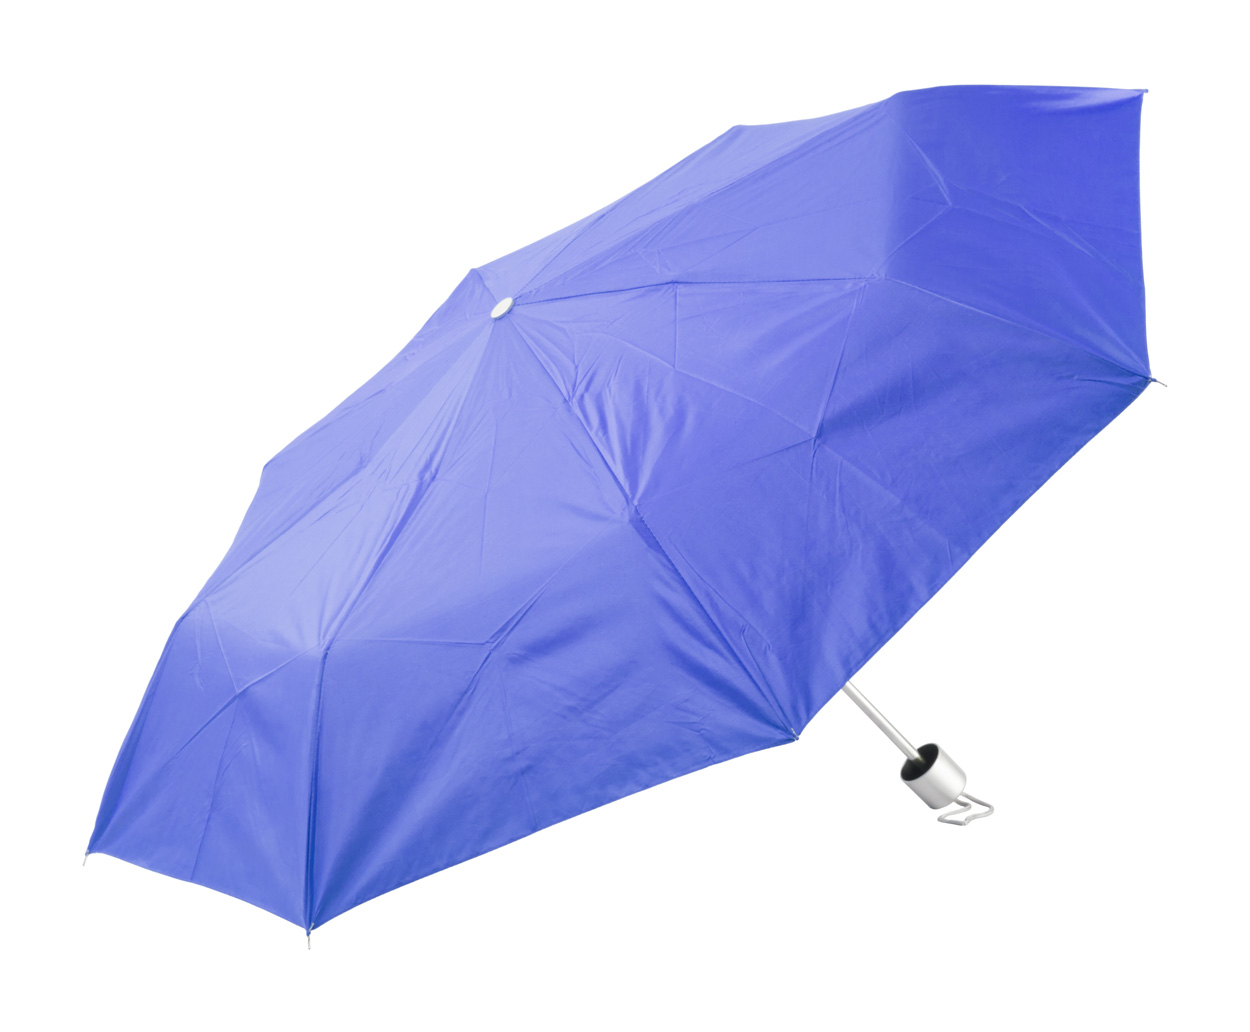 Susan deštník modrá